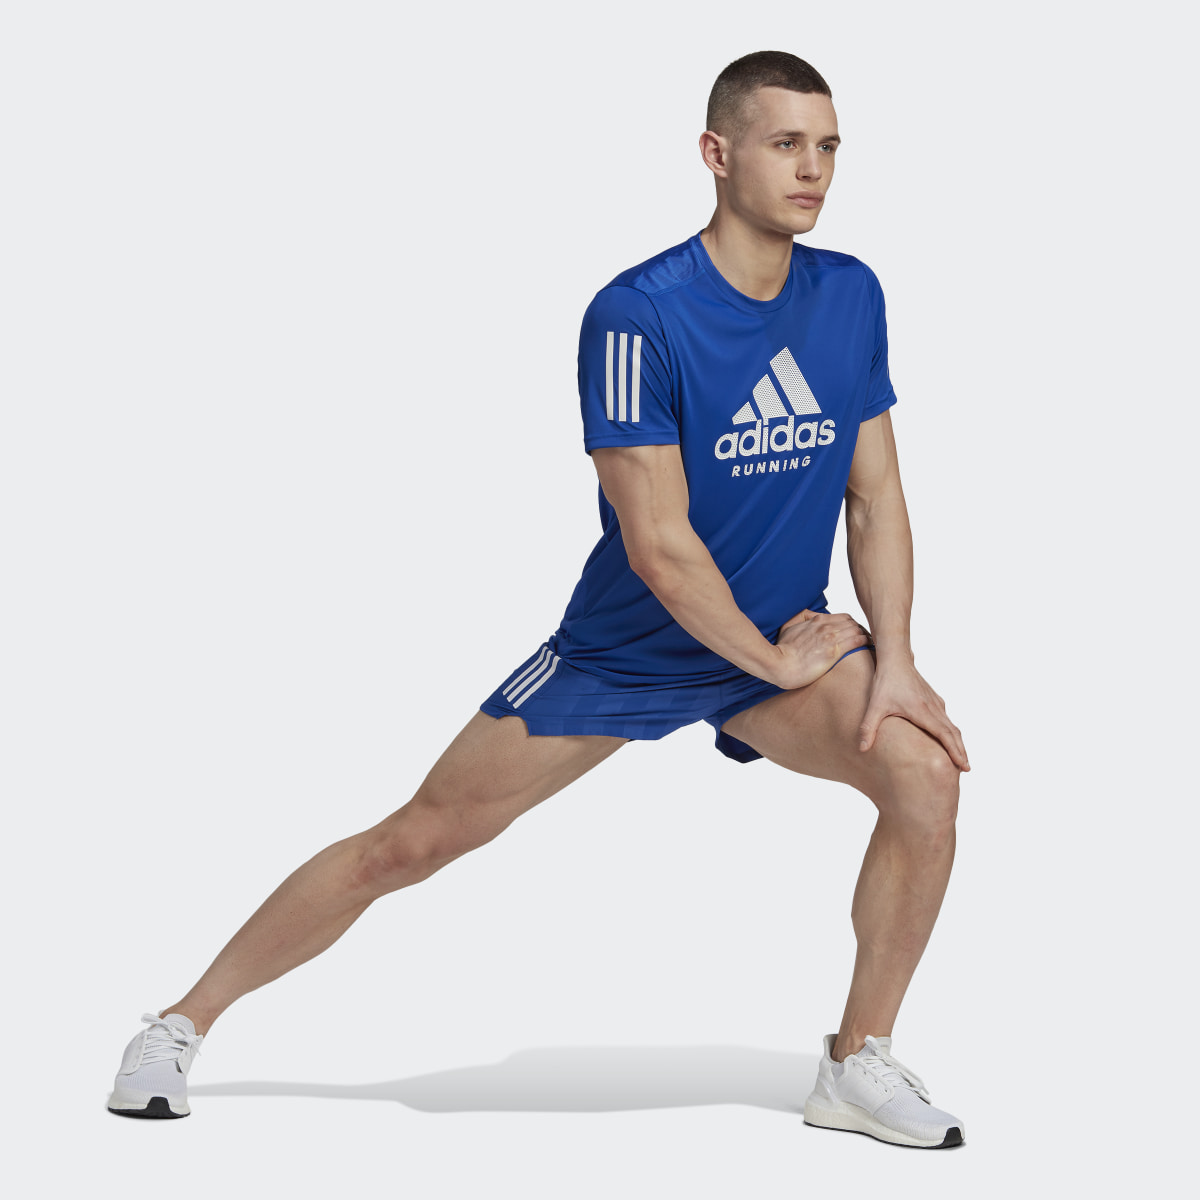 Adidas Own the Run AEROREADY Graphics In-Line Running Short Sleeve T-Shirt. 4